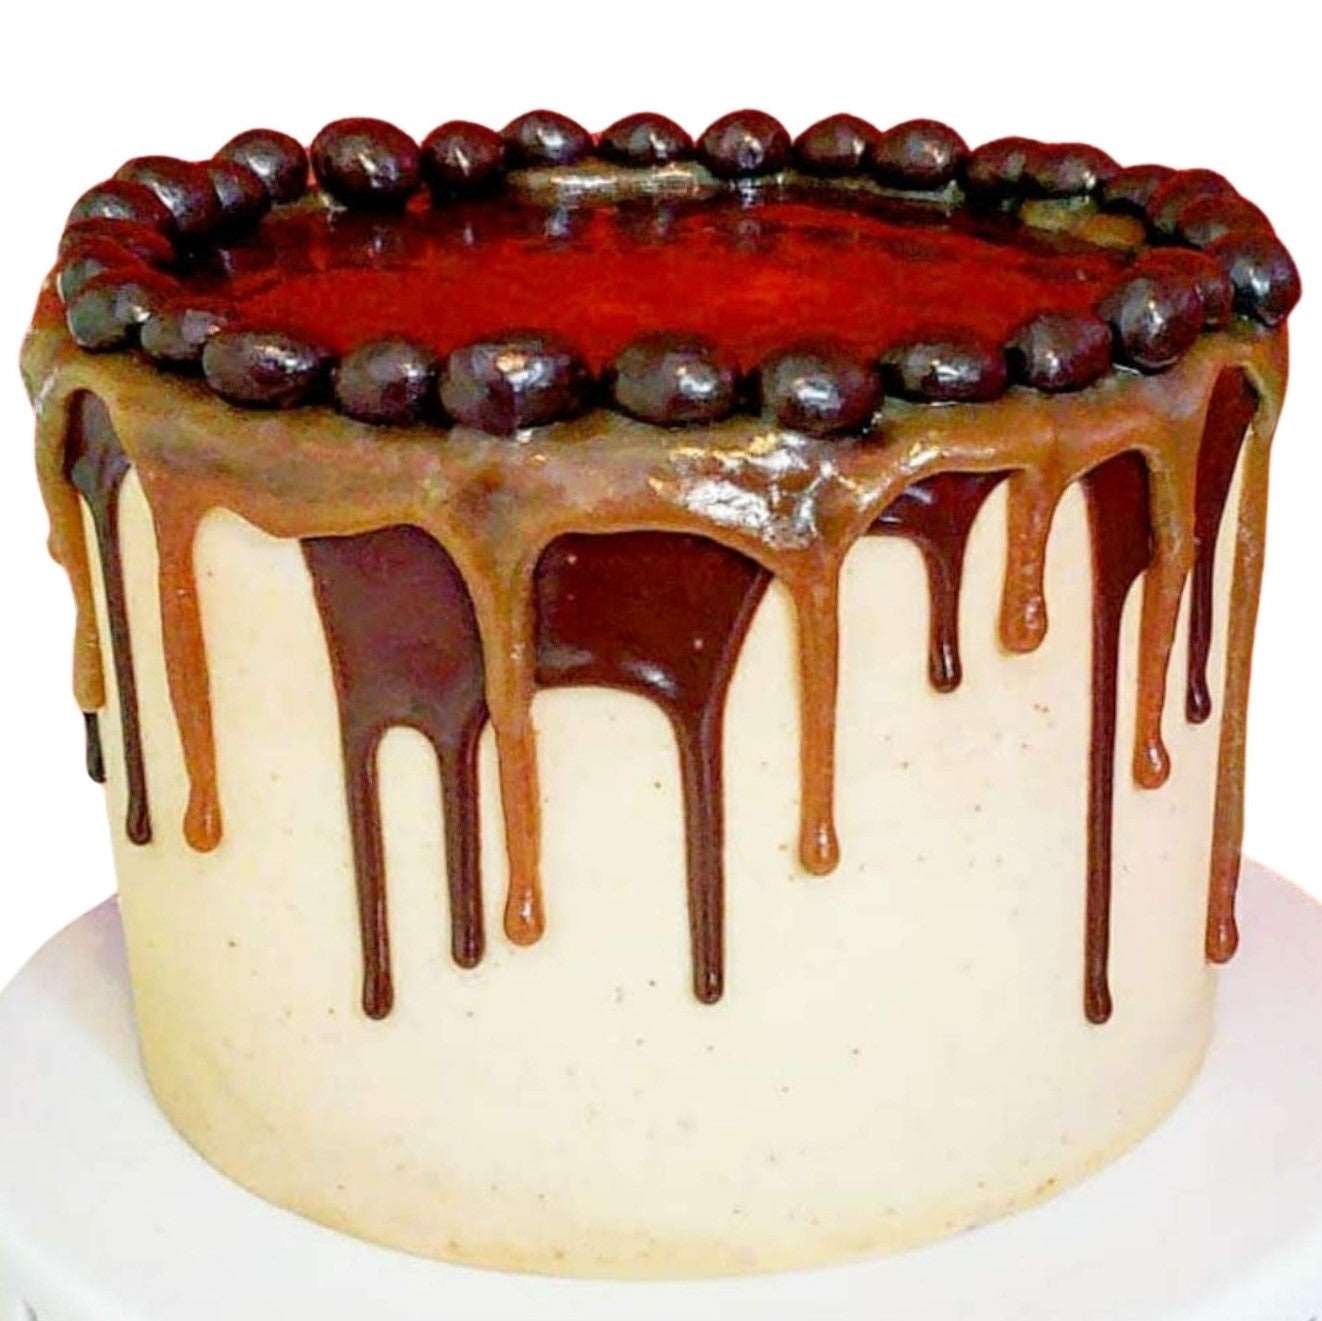 Caramel Macchiato Cake